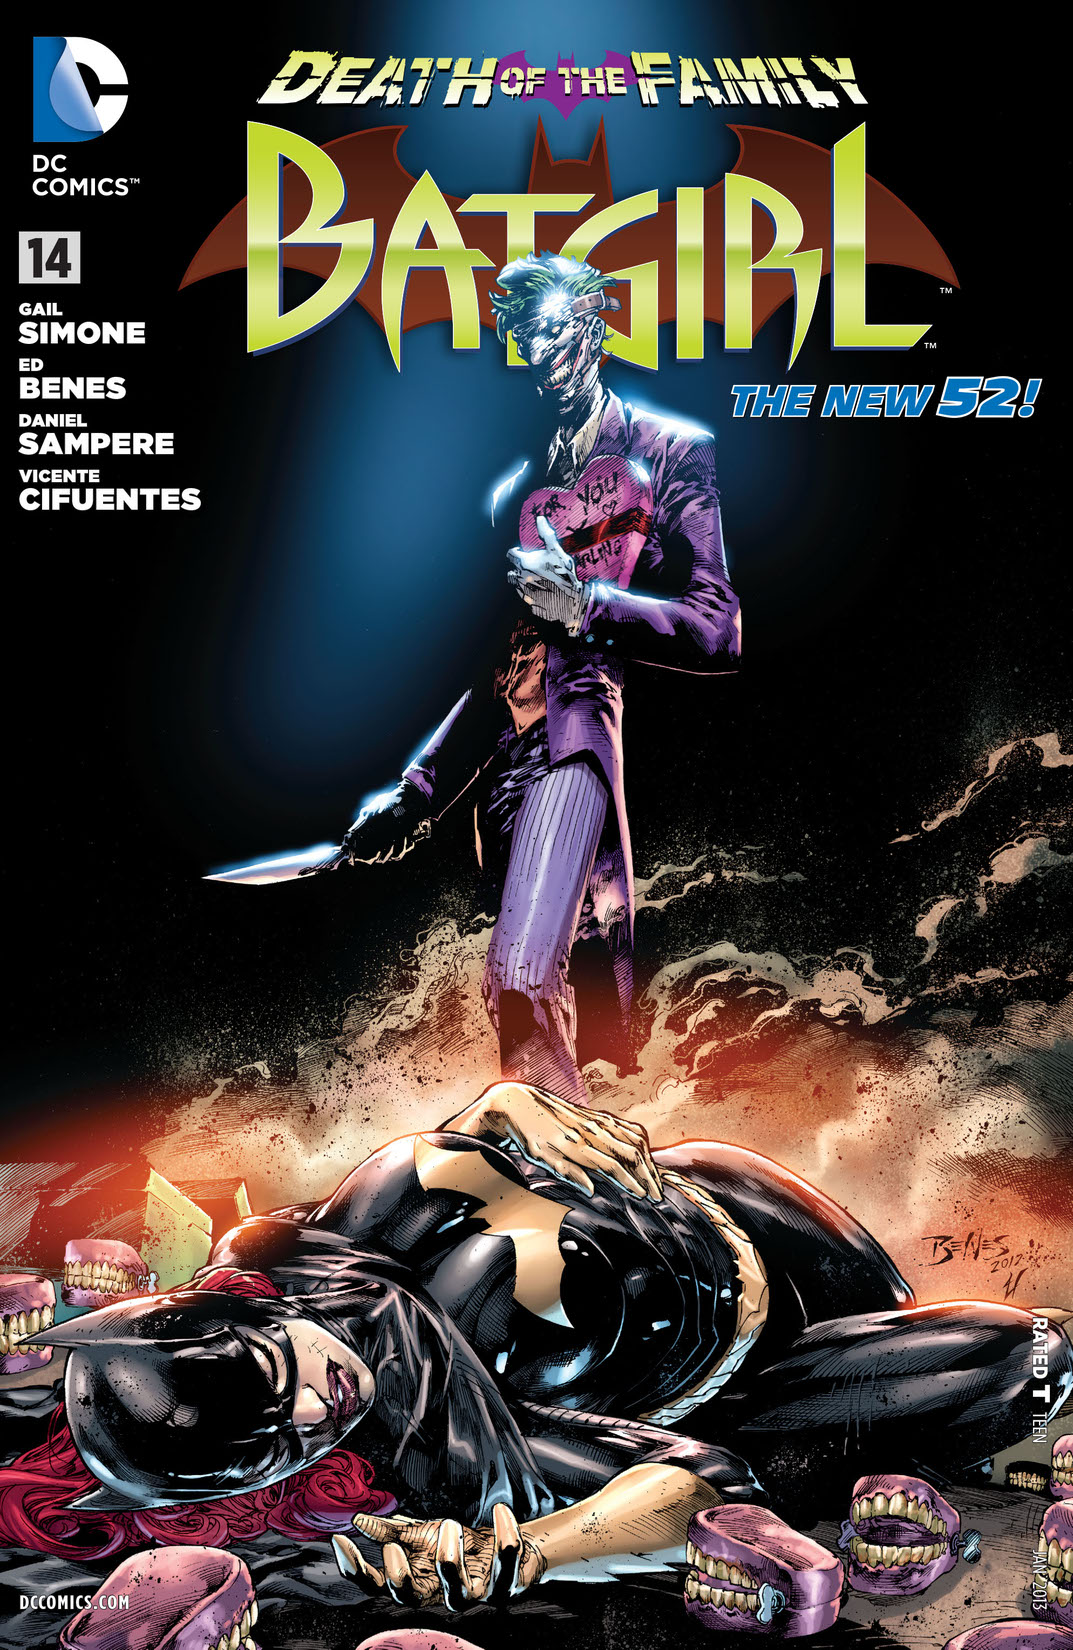 Batgirl (2011-) #14 preview images